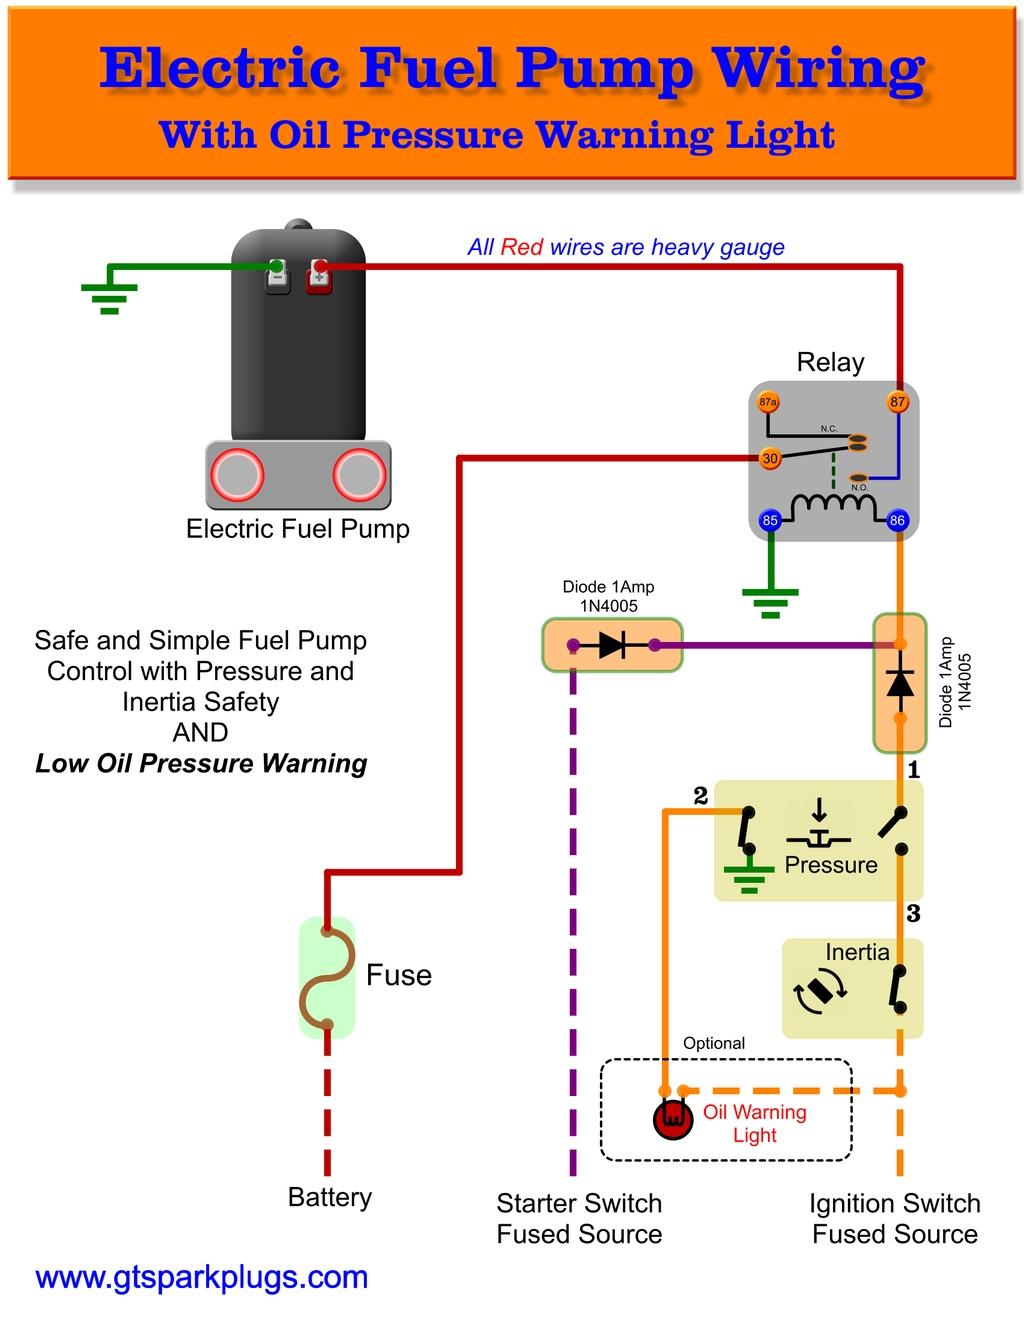 Electric Fuel Pump Wiring - Data Wiring Diagram Detailed - Electric Fuel Pump Wiring Diagram